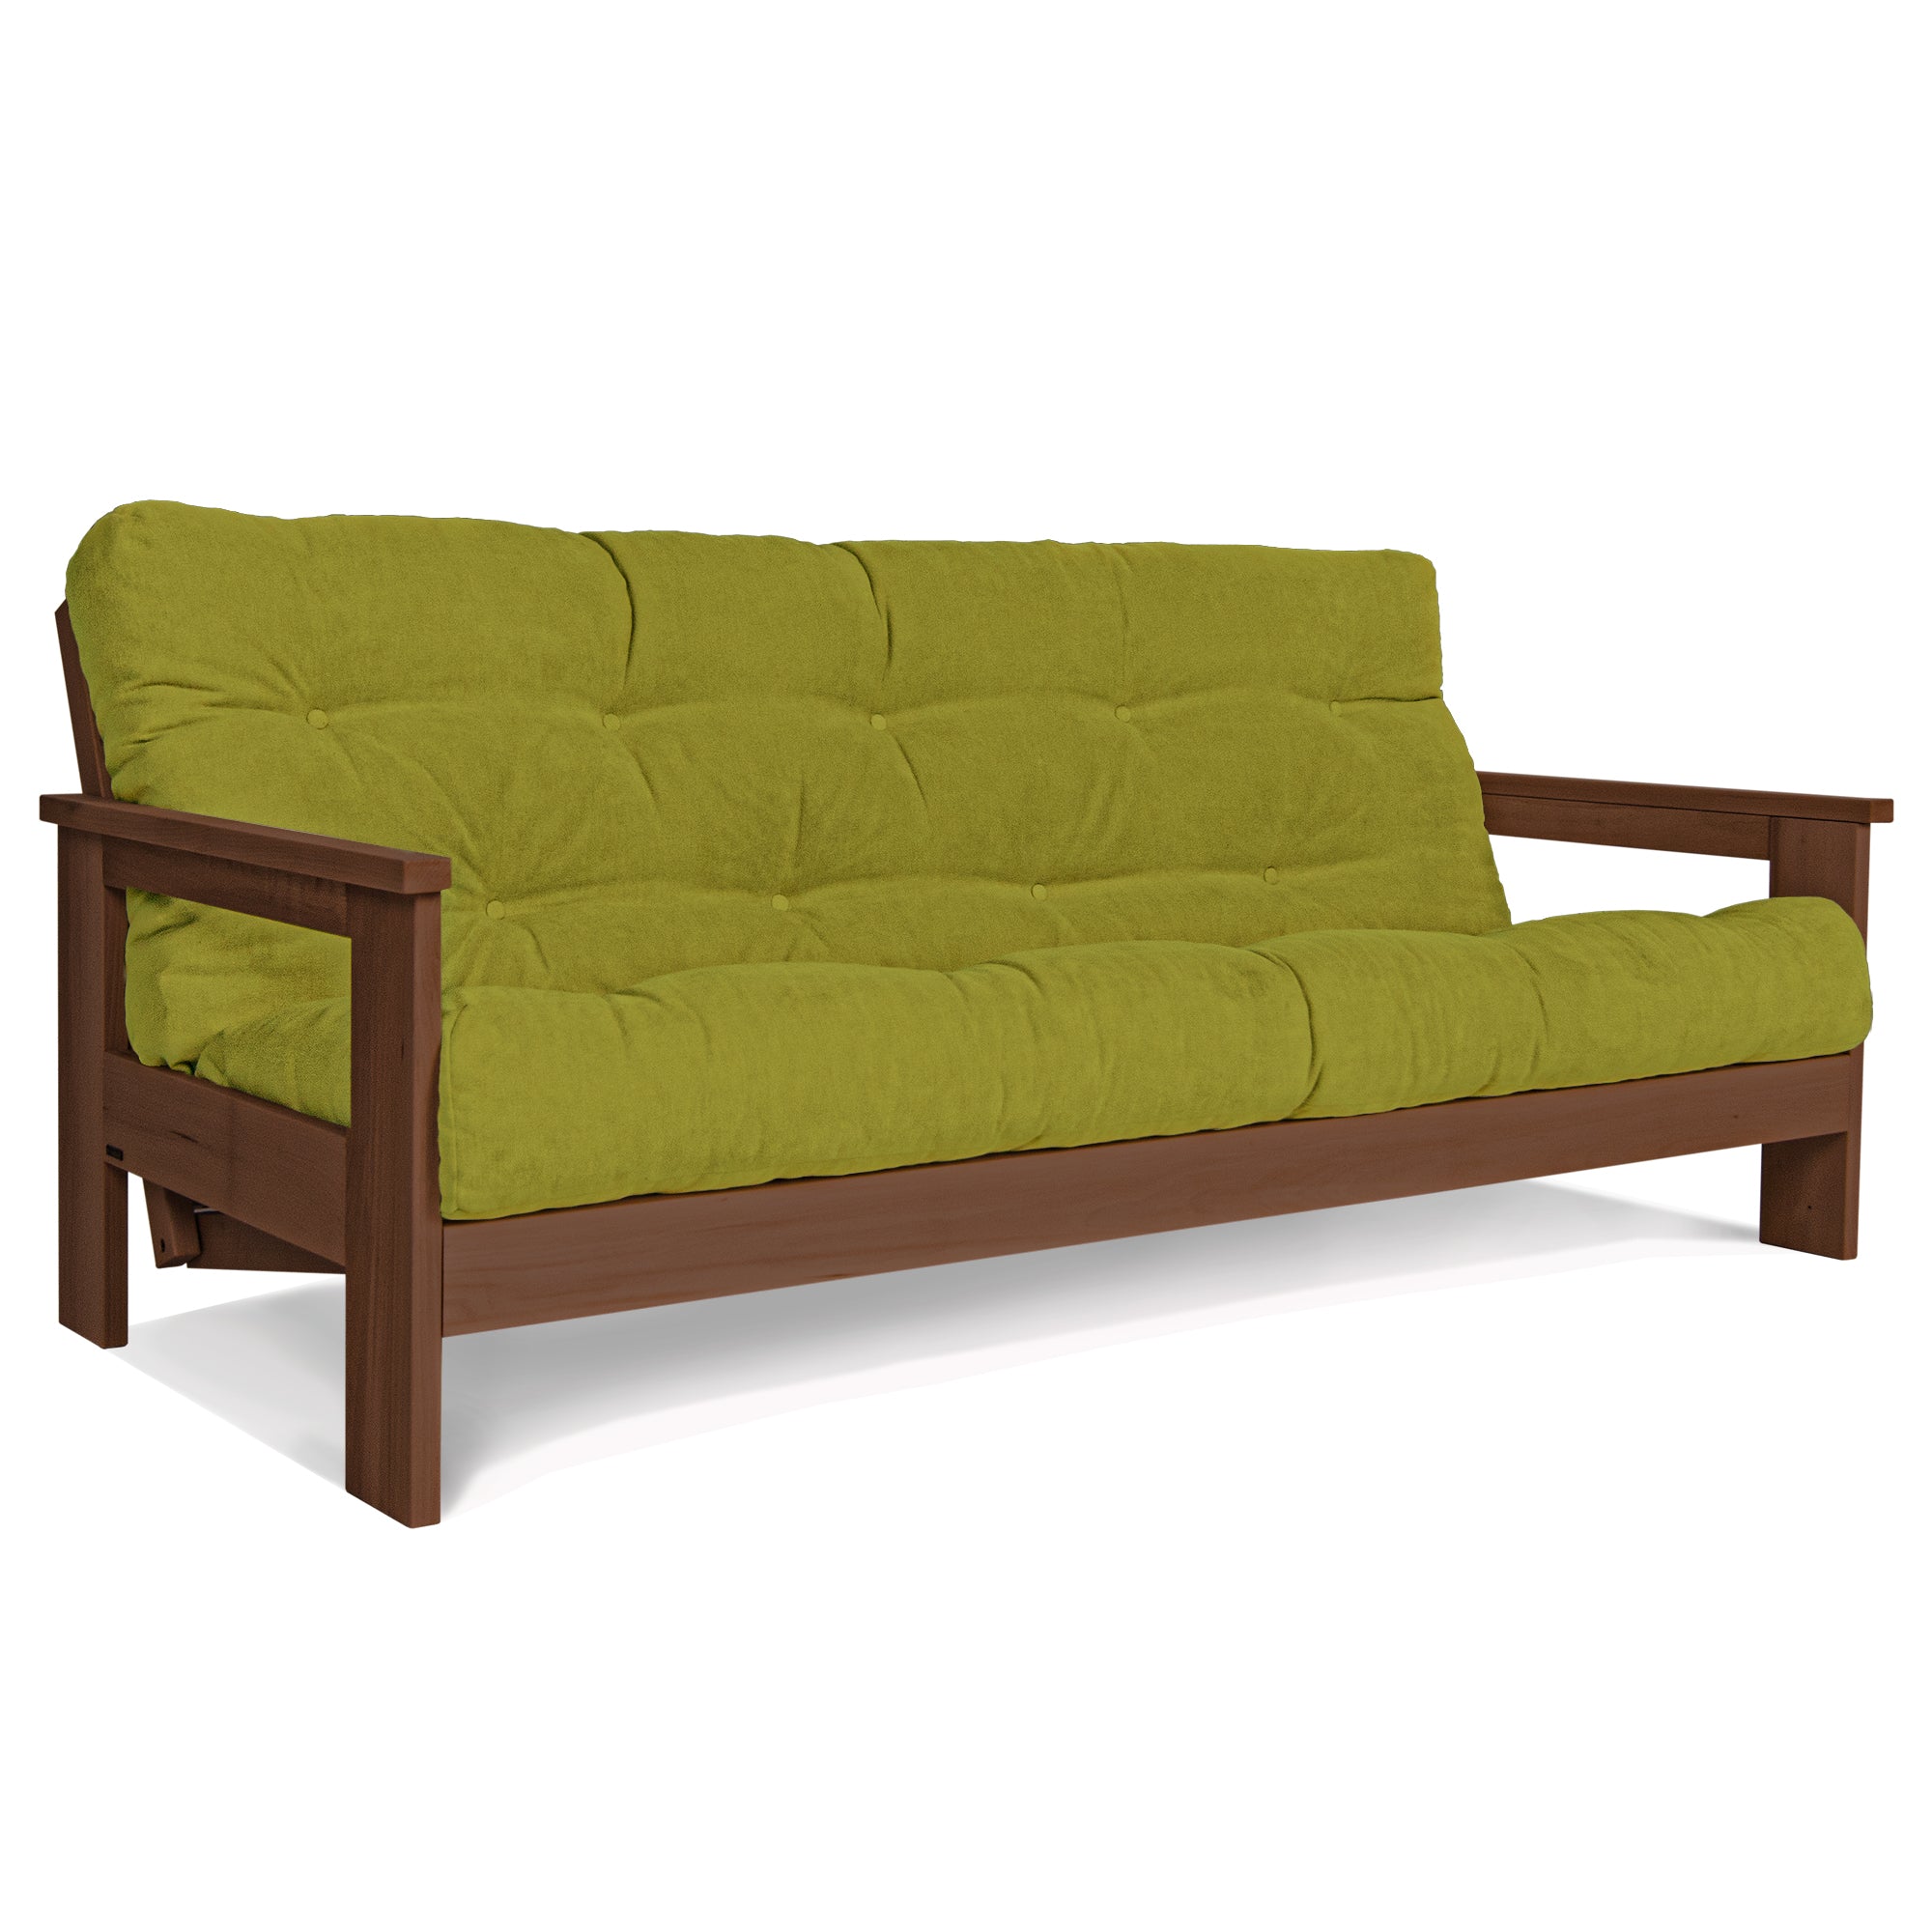 MEXICO Folding Sofa Bed-Beech Wood Frame-Walnut Colour-gray fabric colour-green fabric colour